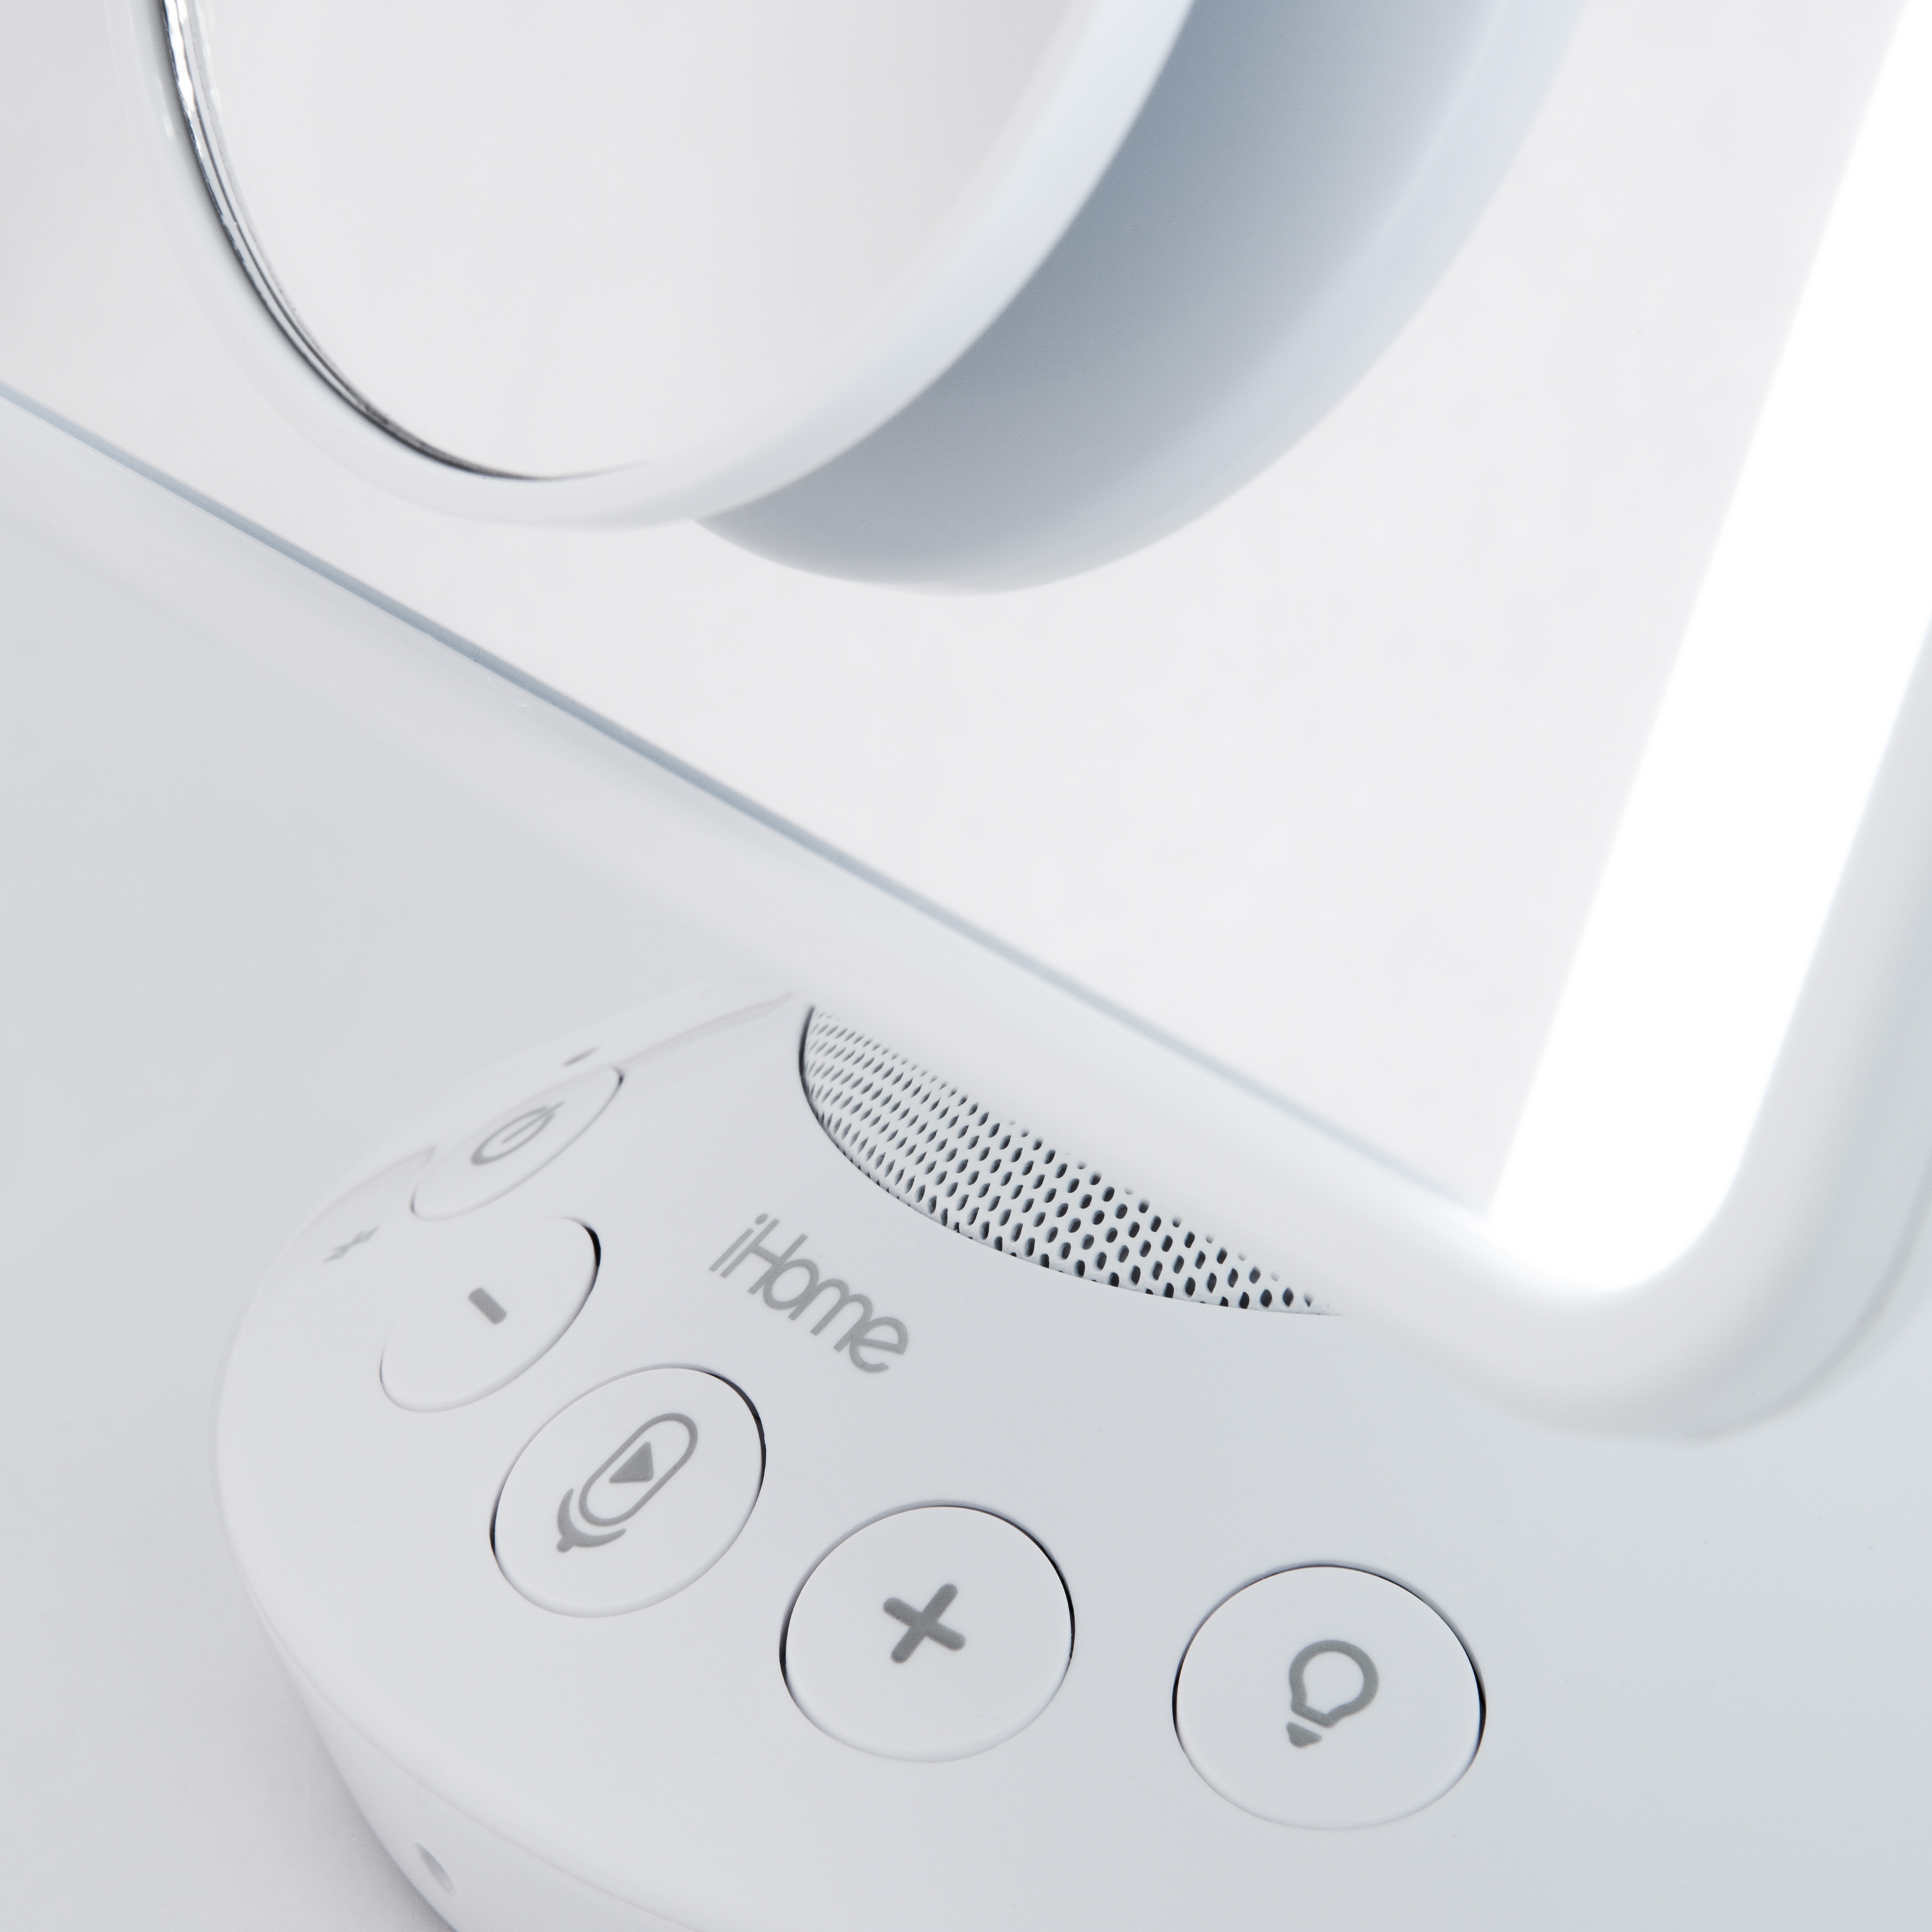 iHome Mirror with Bluetooth Audio, LED Lighting, Bonus 10x Magnification, USB Charging, 7" x 9" - image 5 of 12